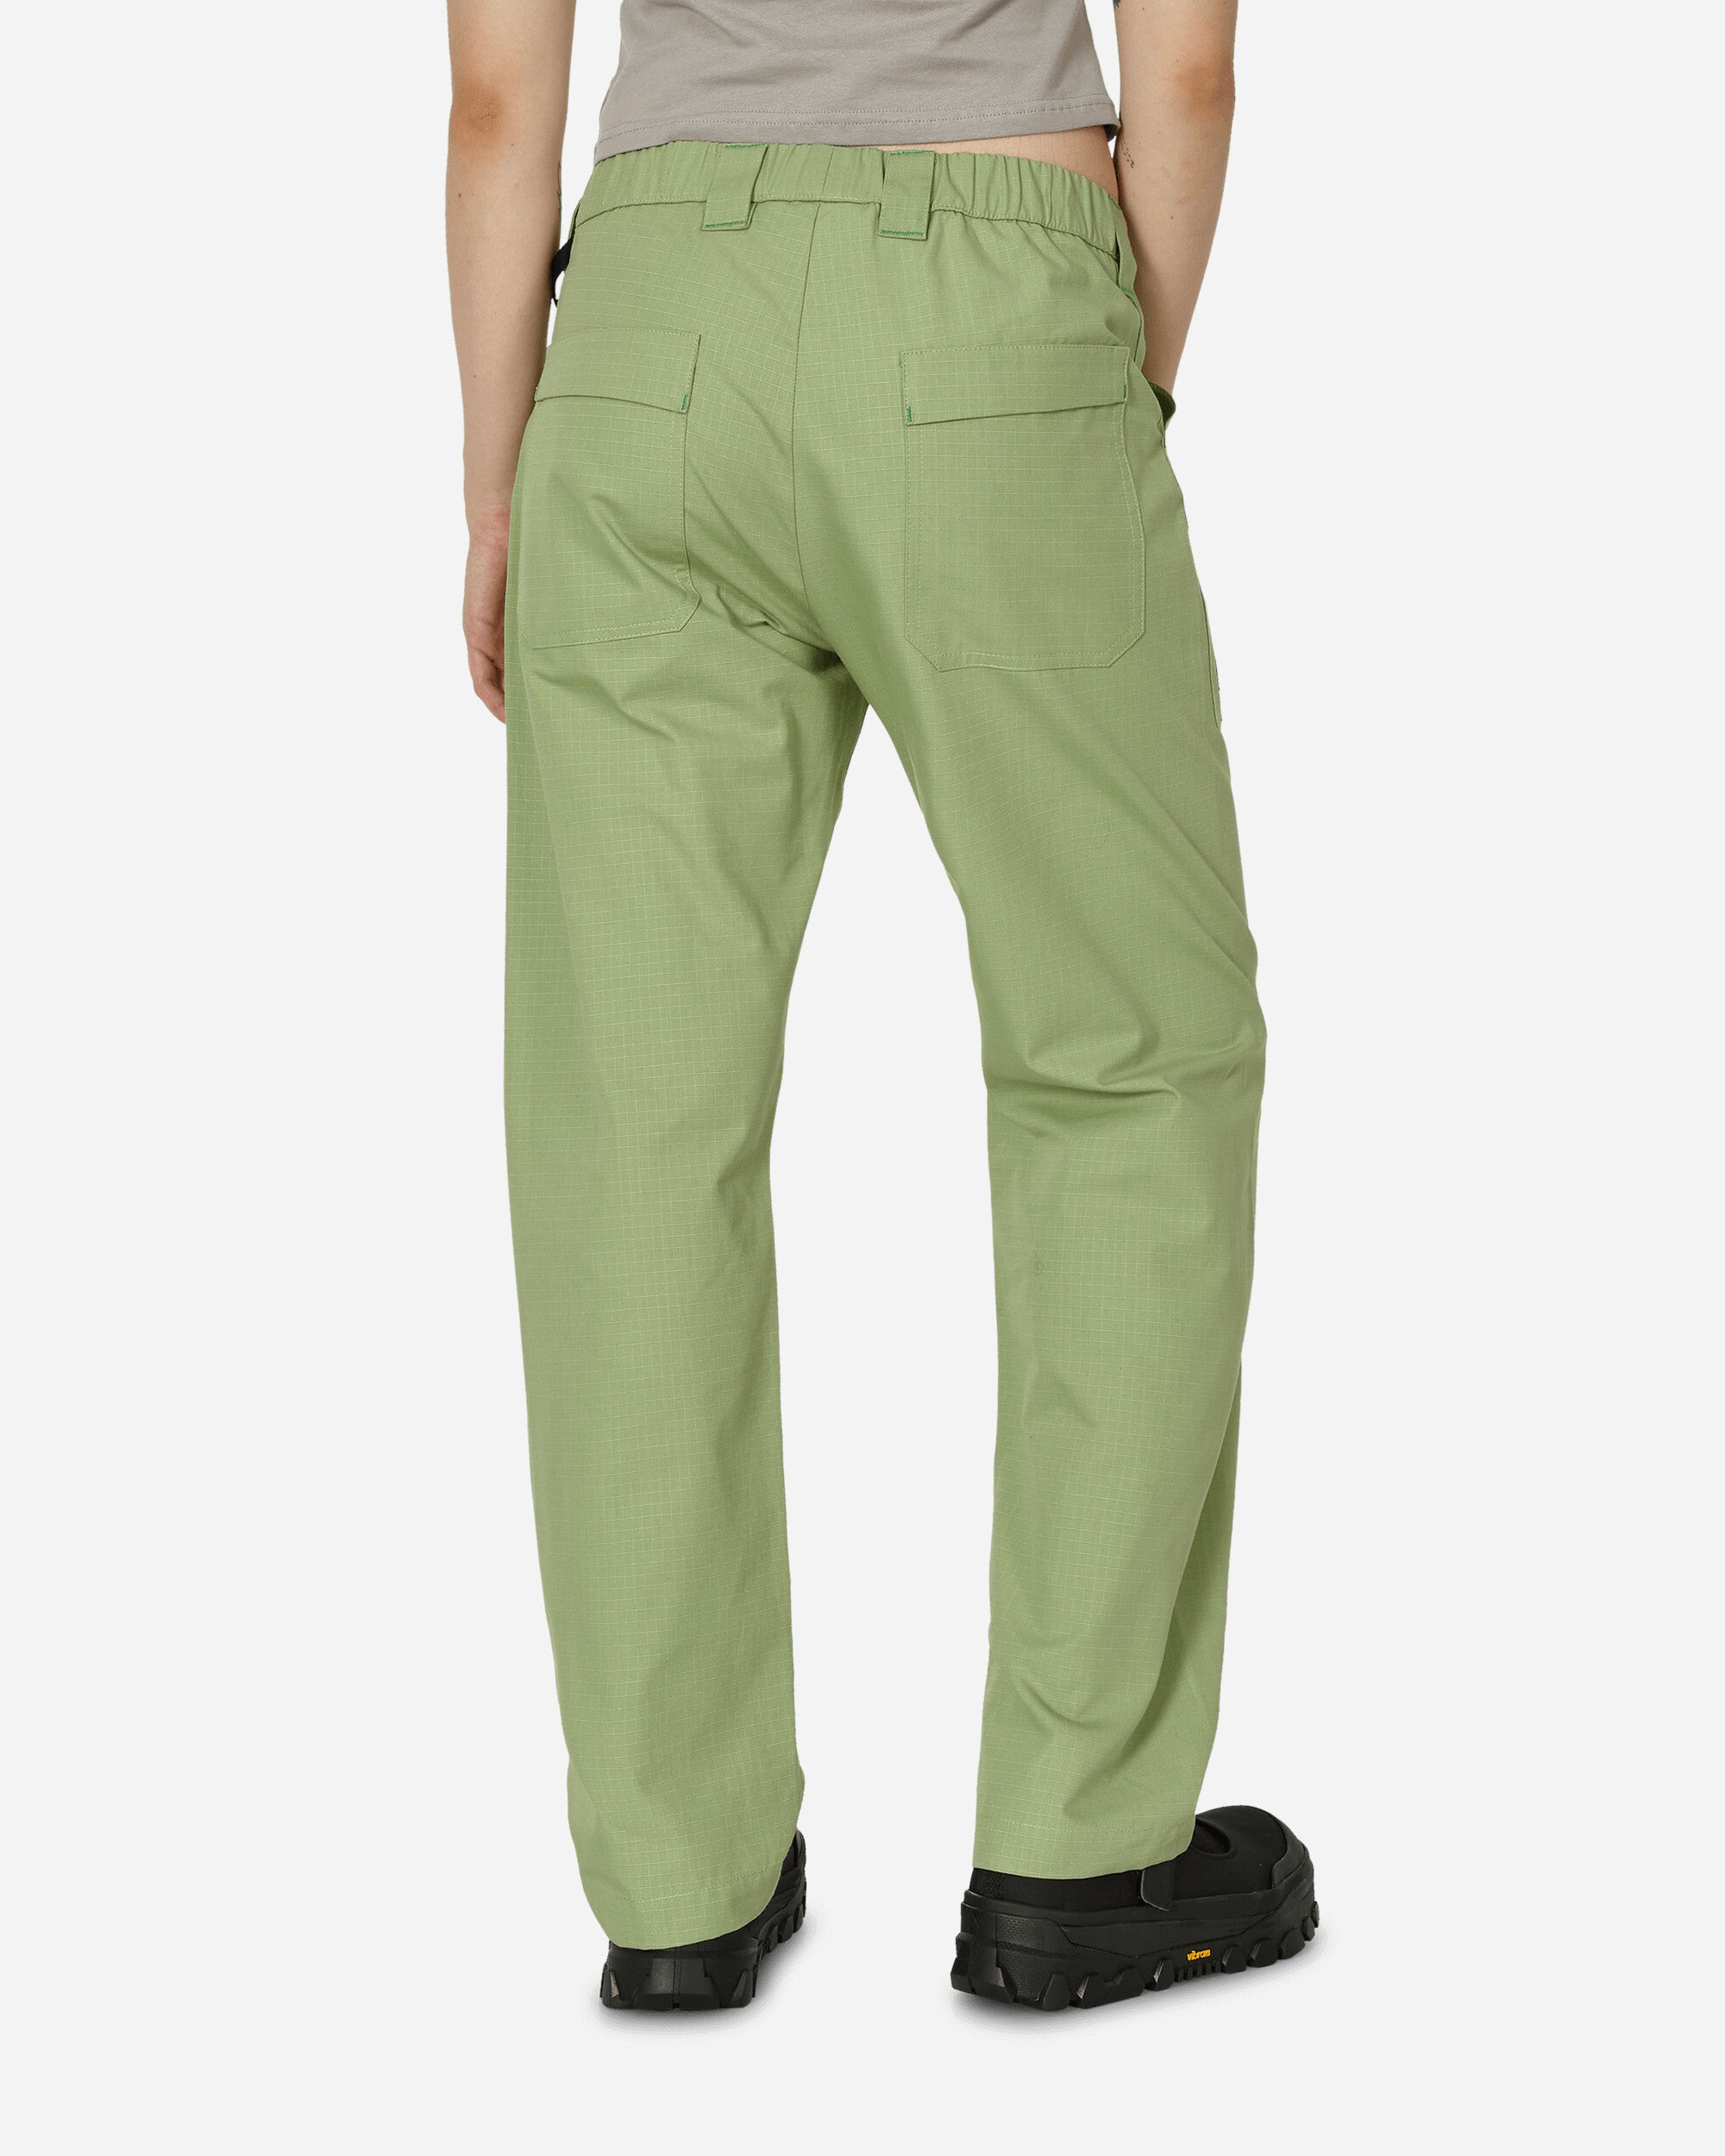 Rayon Vert Fubar Pants Og Sabre Green Pants Trousers RVS2-PT09 001